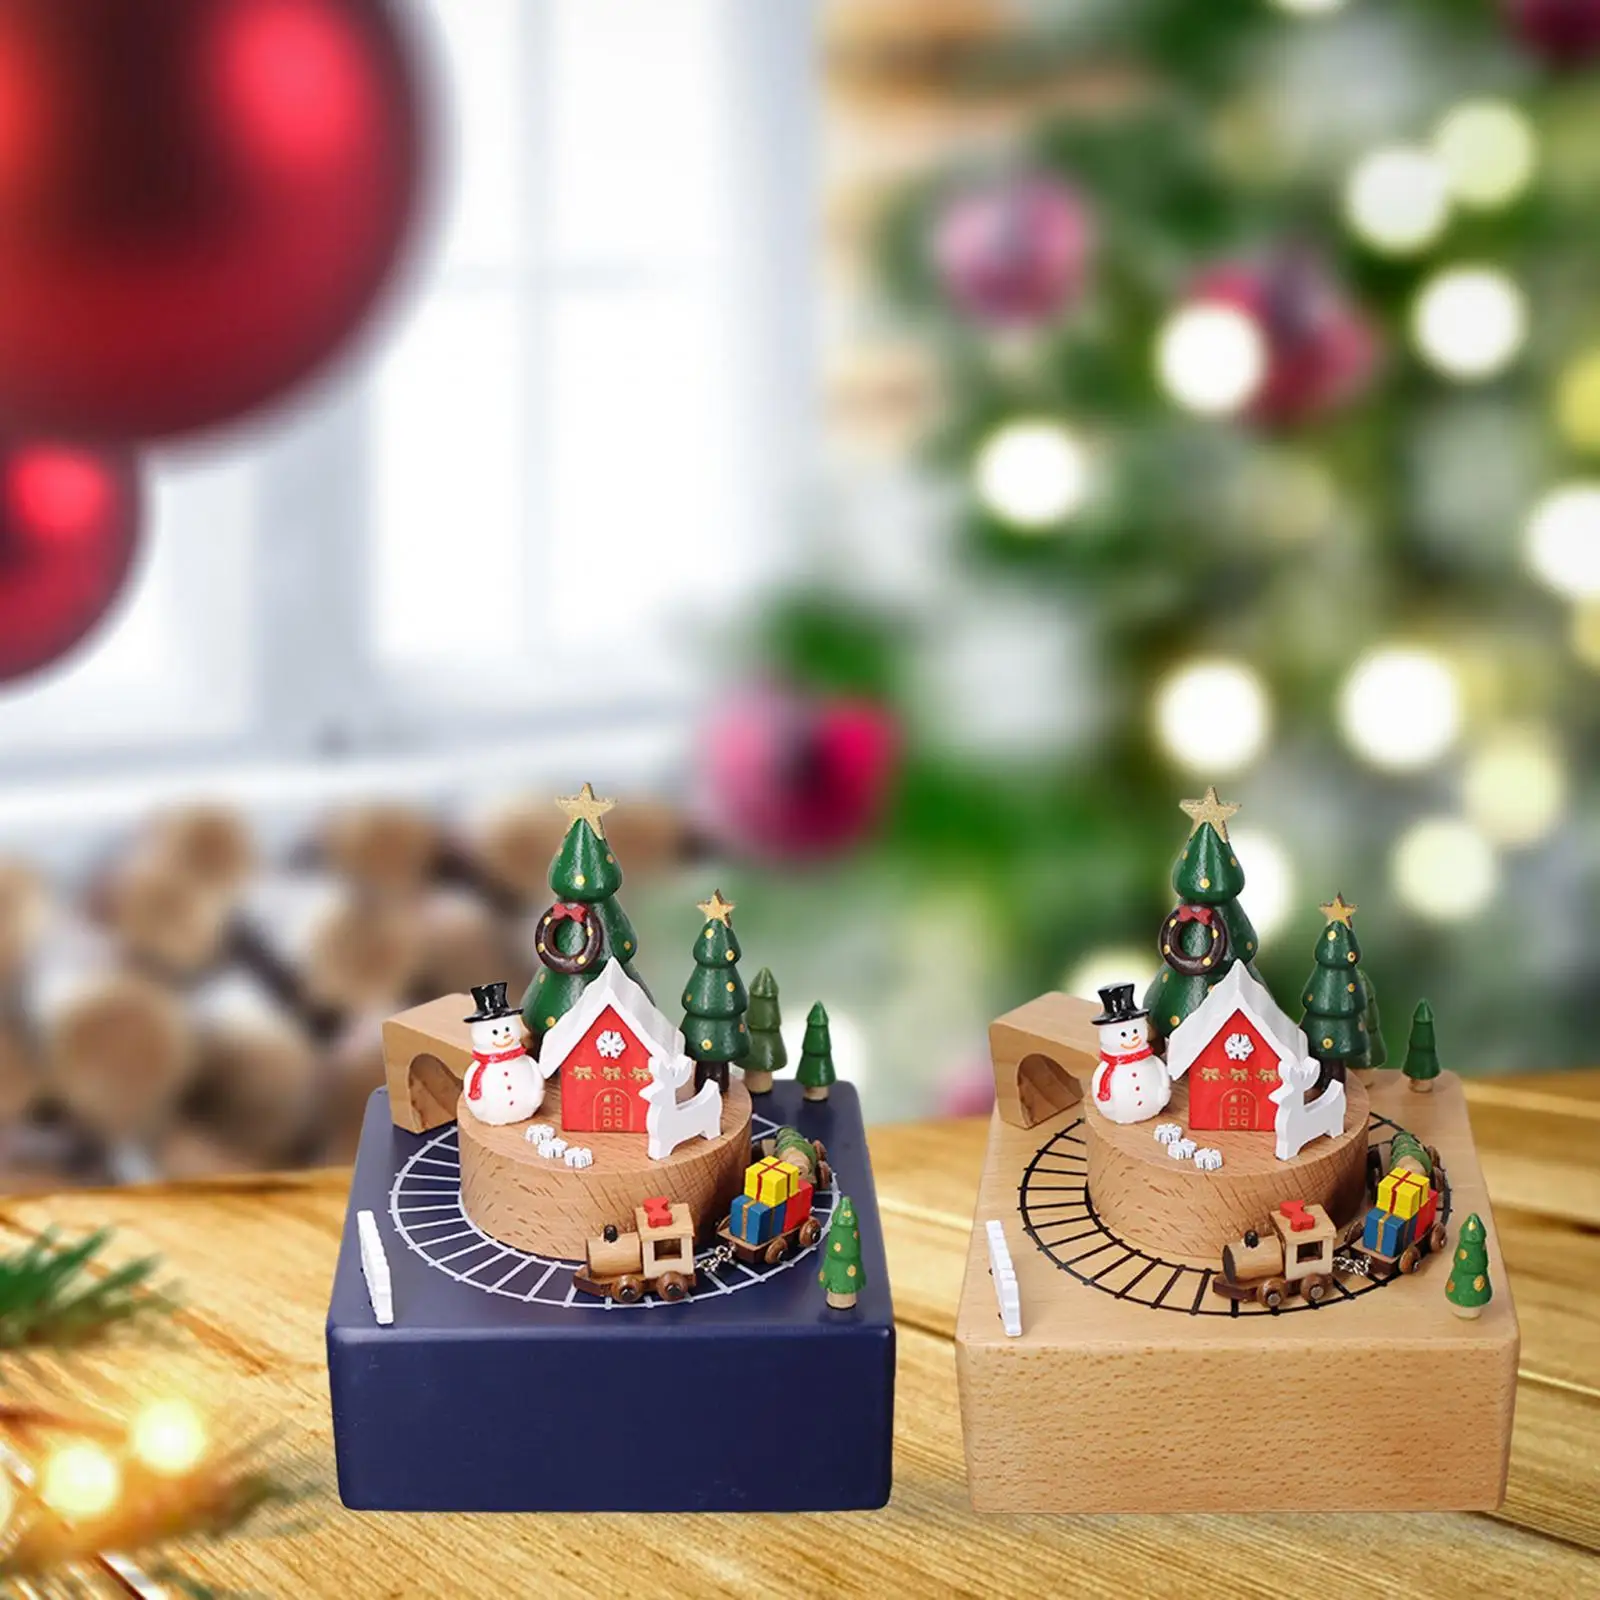 Christmas Train Musical Box Classic Clockwork Type Play Melody ``merry Christmas`` Handmade for Family Kids Christmas Holiday